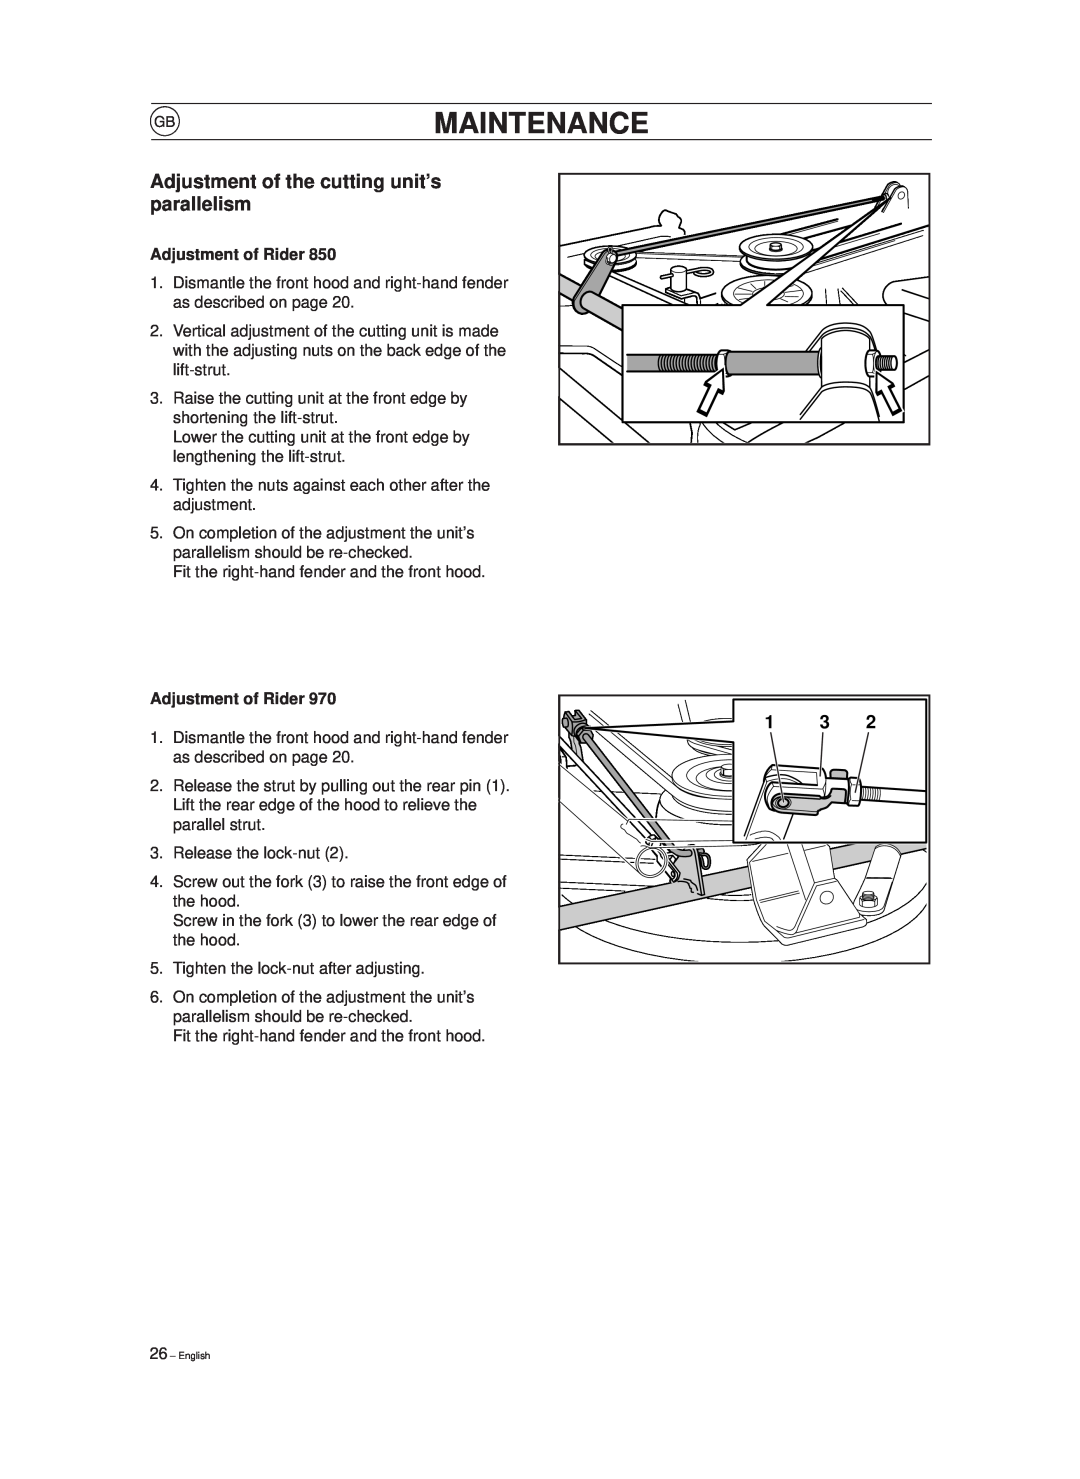 Husqvarna 850, 970 manual Adjustment of the cutting unit’s parallelism, Emaintenance, English 